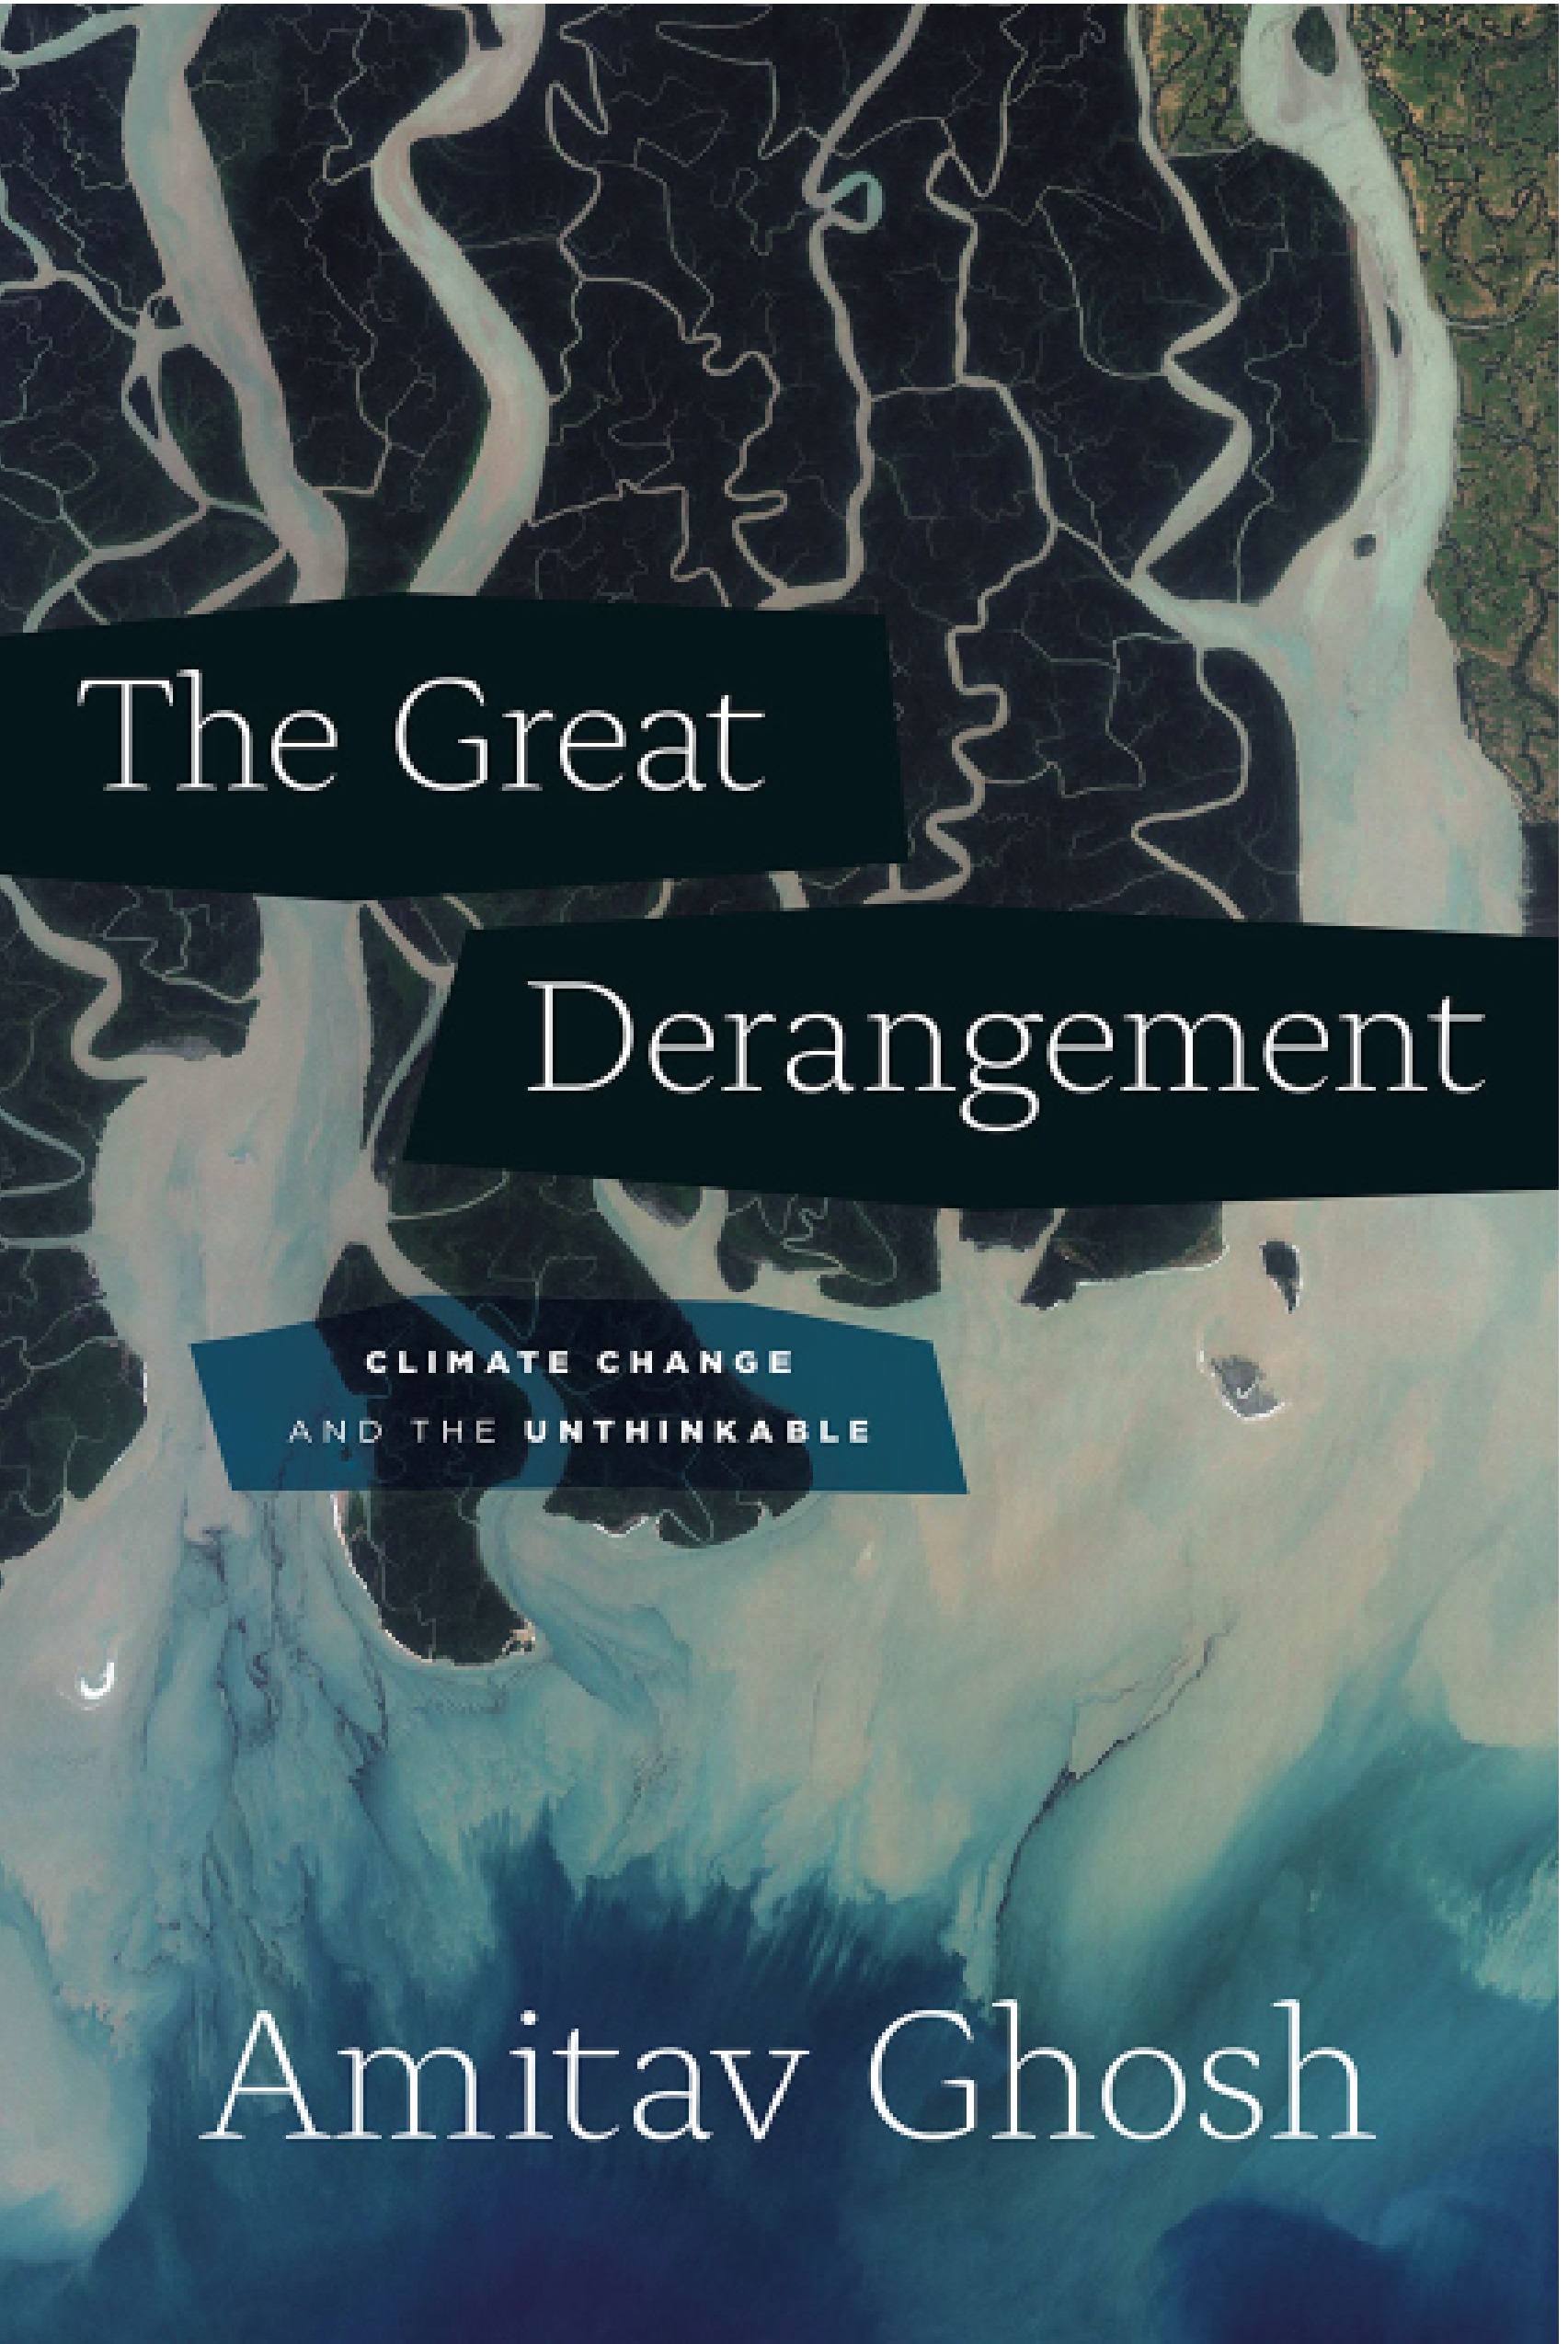 The-Great-Derangment by Amitav Ghosh